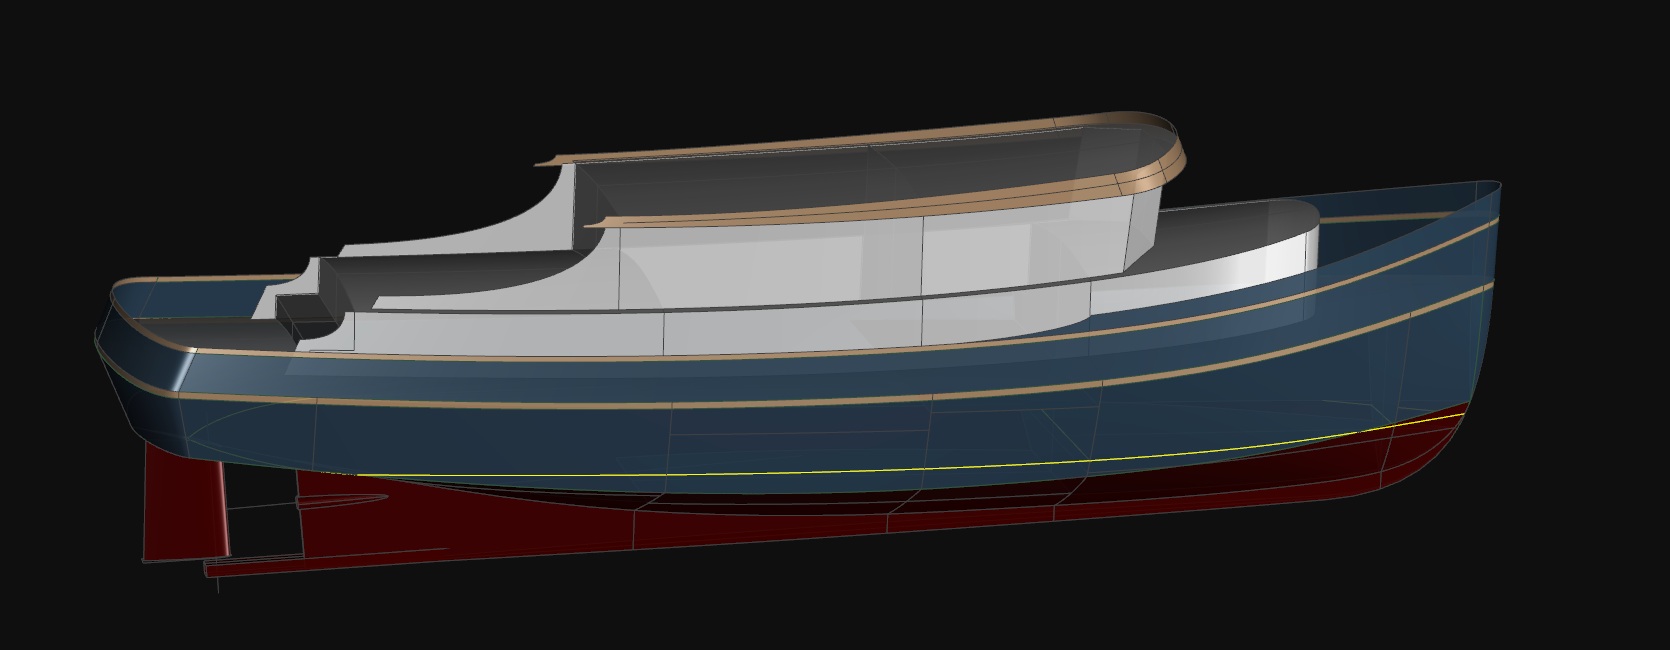 The 49' Trawler Yacht - DOUBLE EAGLE - Kasten Marine Design, Inc.